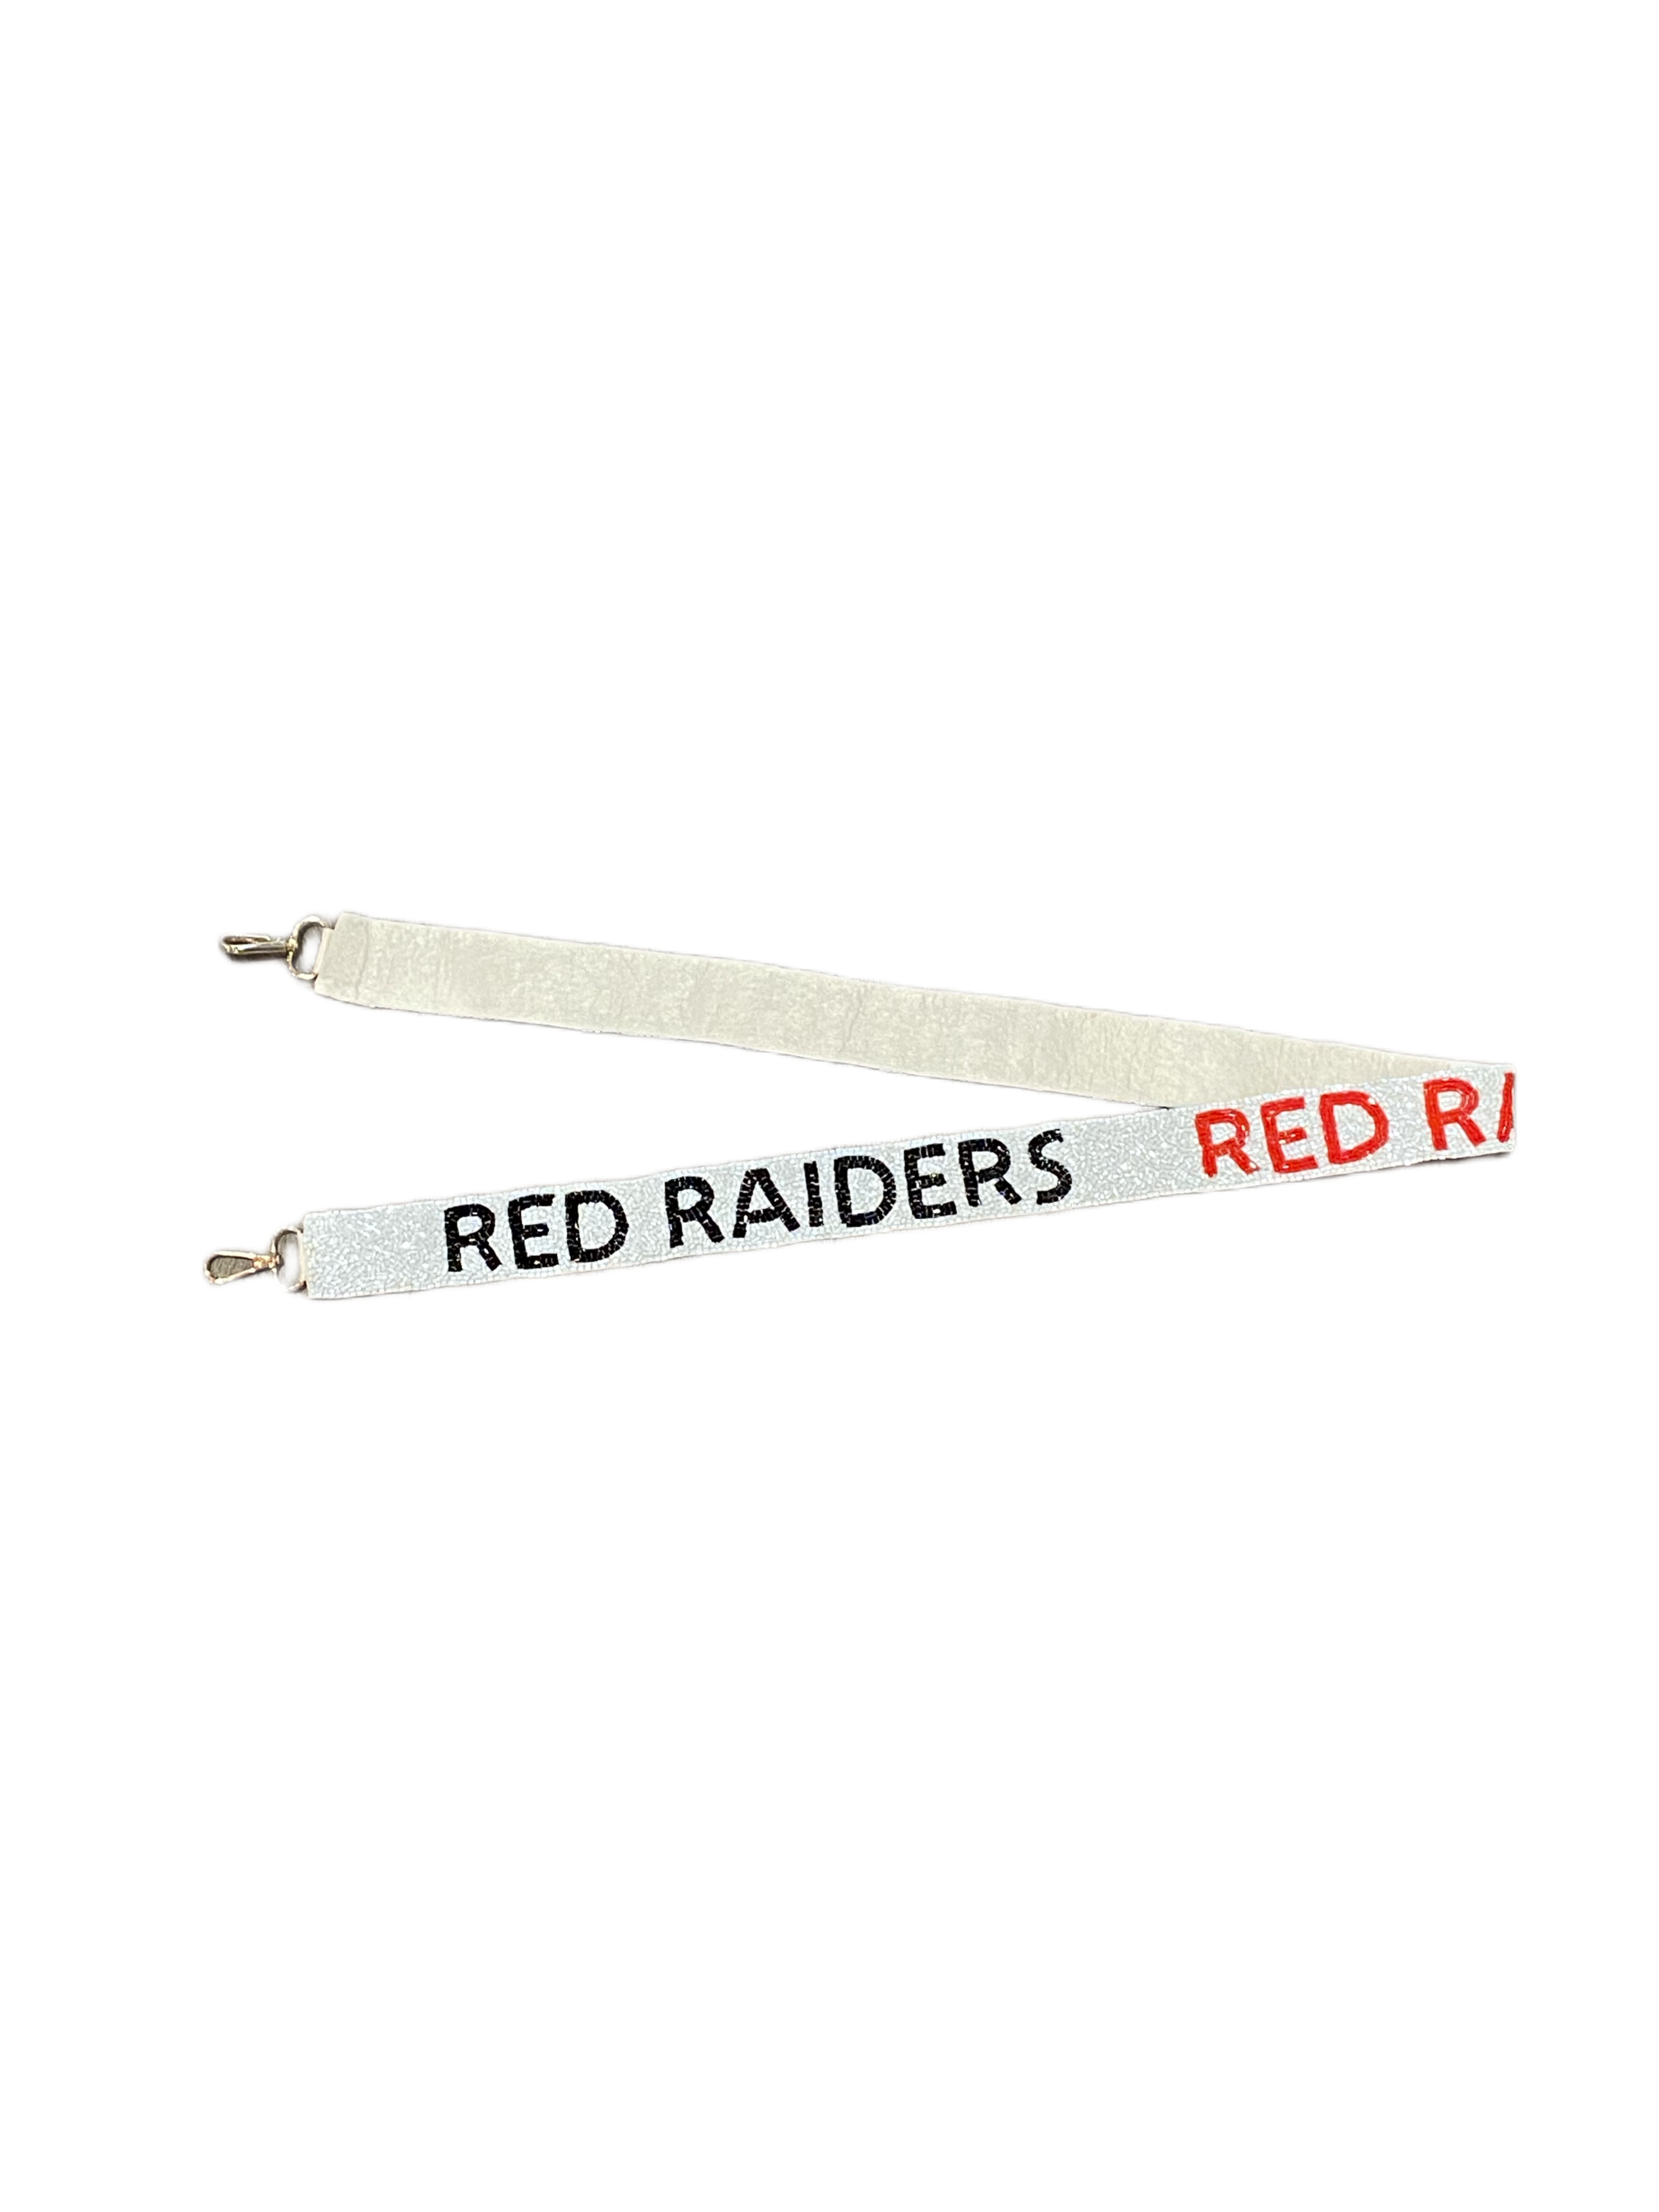 Red Raiders Strap